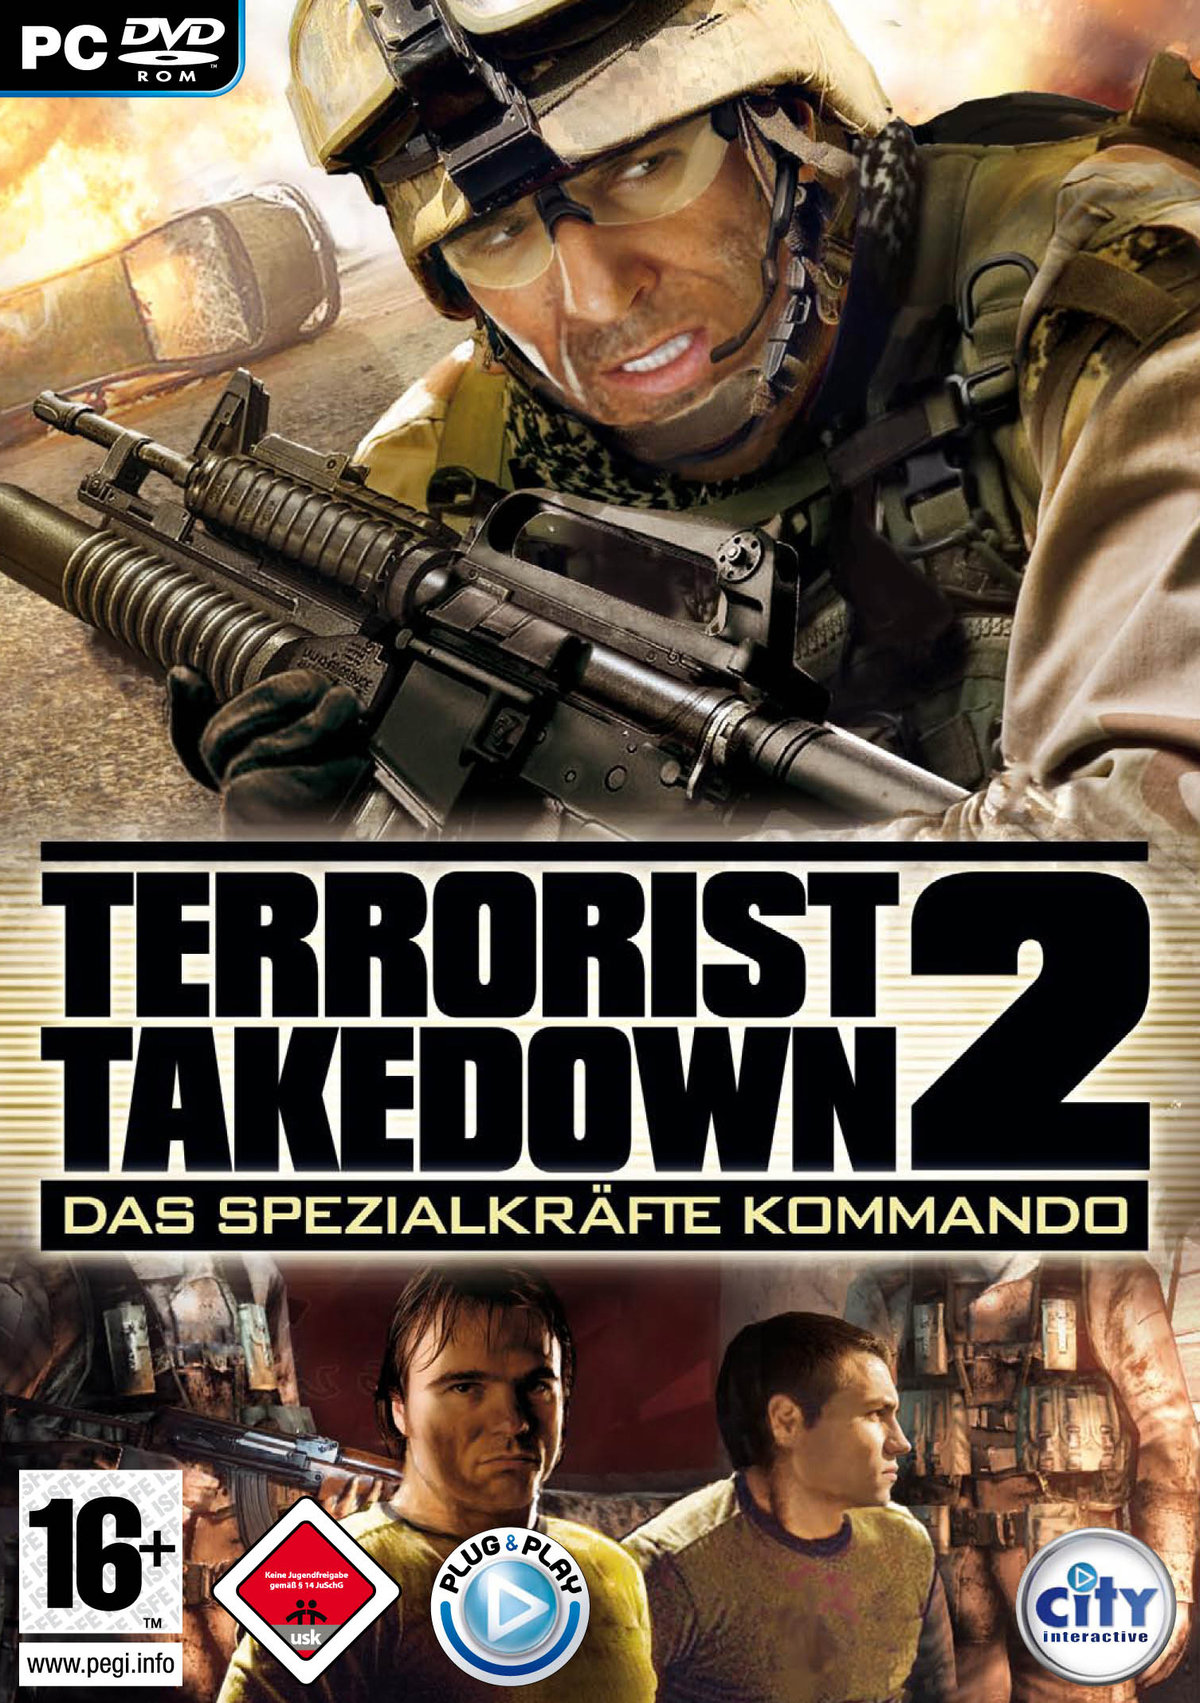 Terrorist Takedown 2 von City Interactive